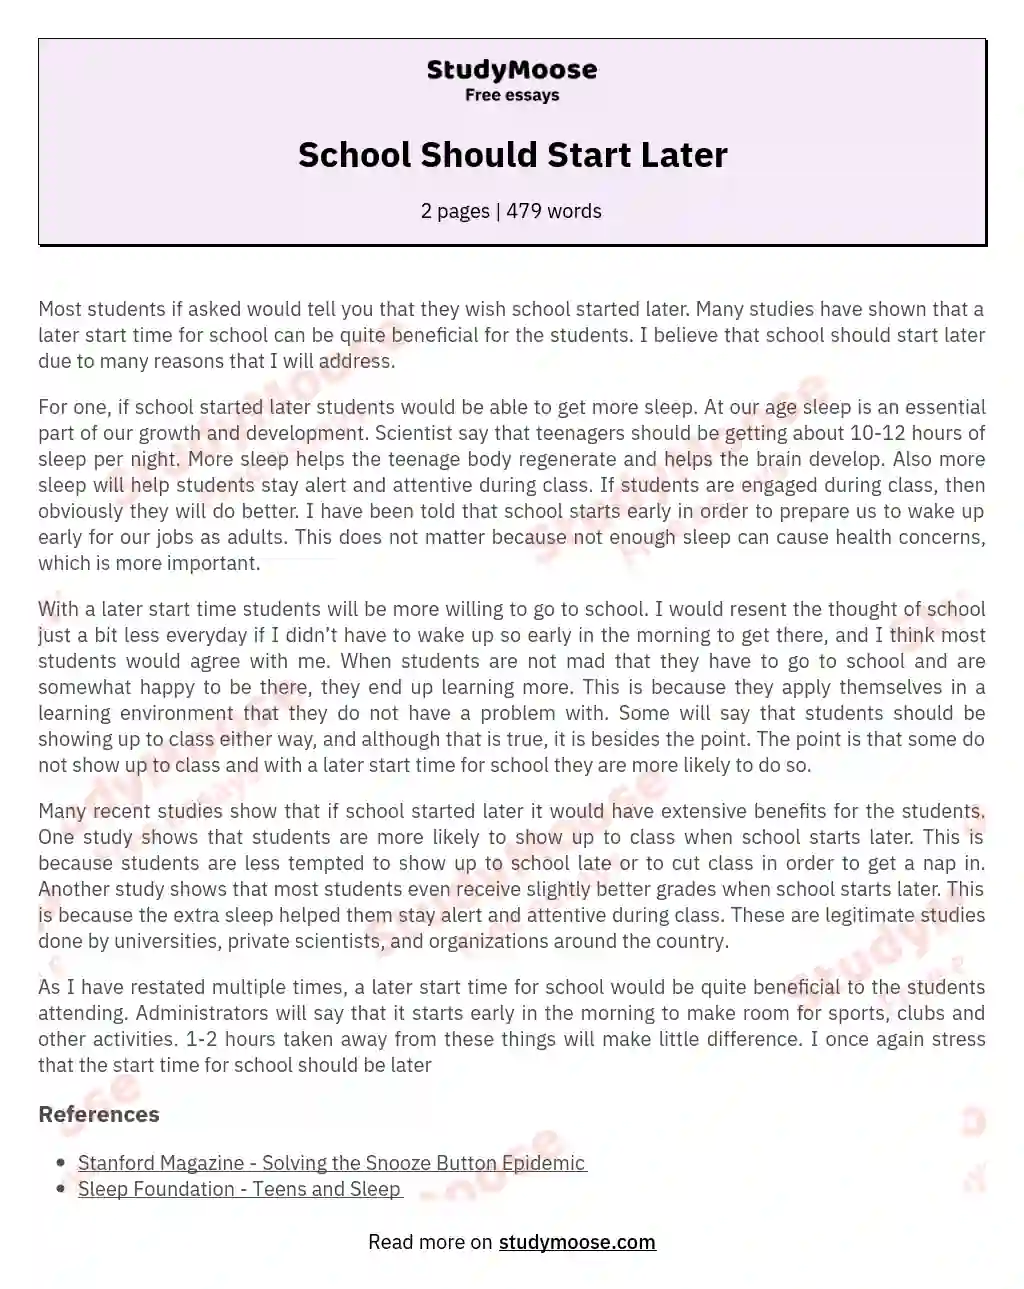 School Should Start Later essay